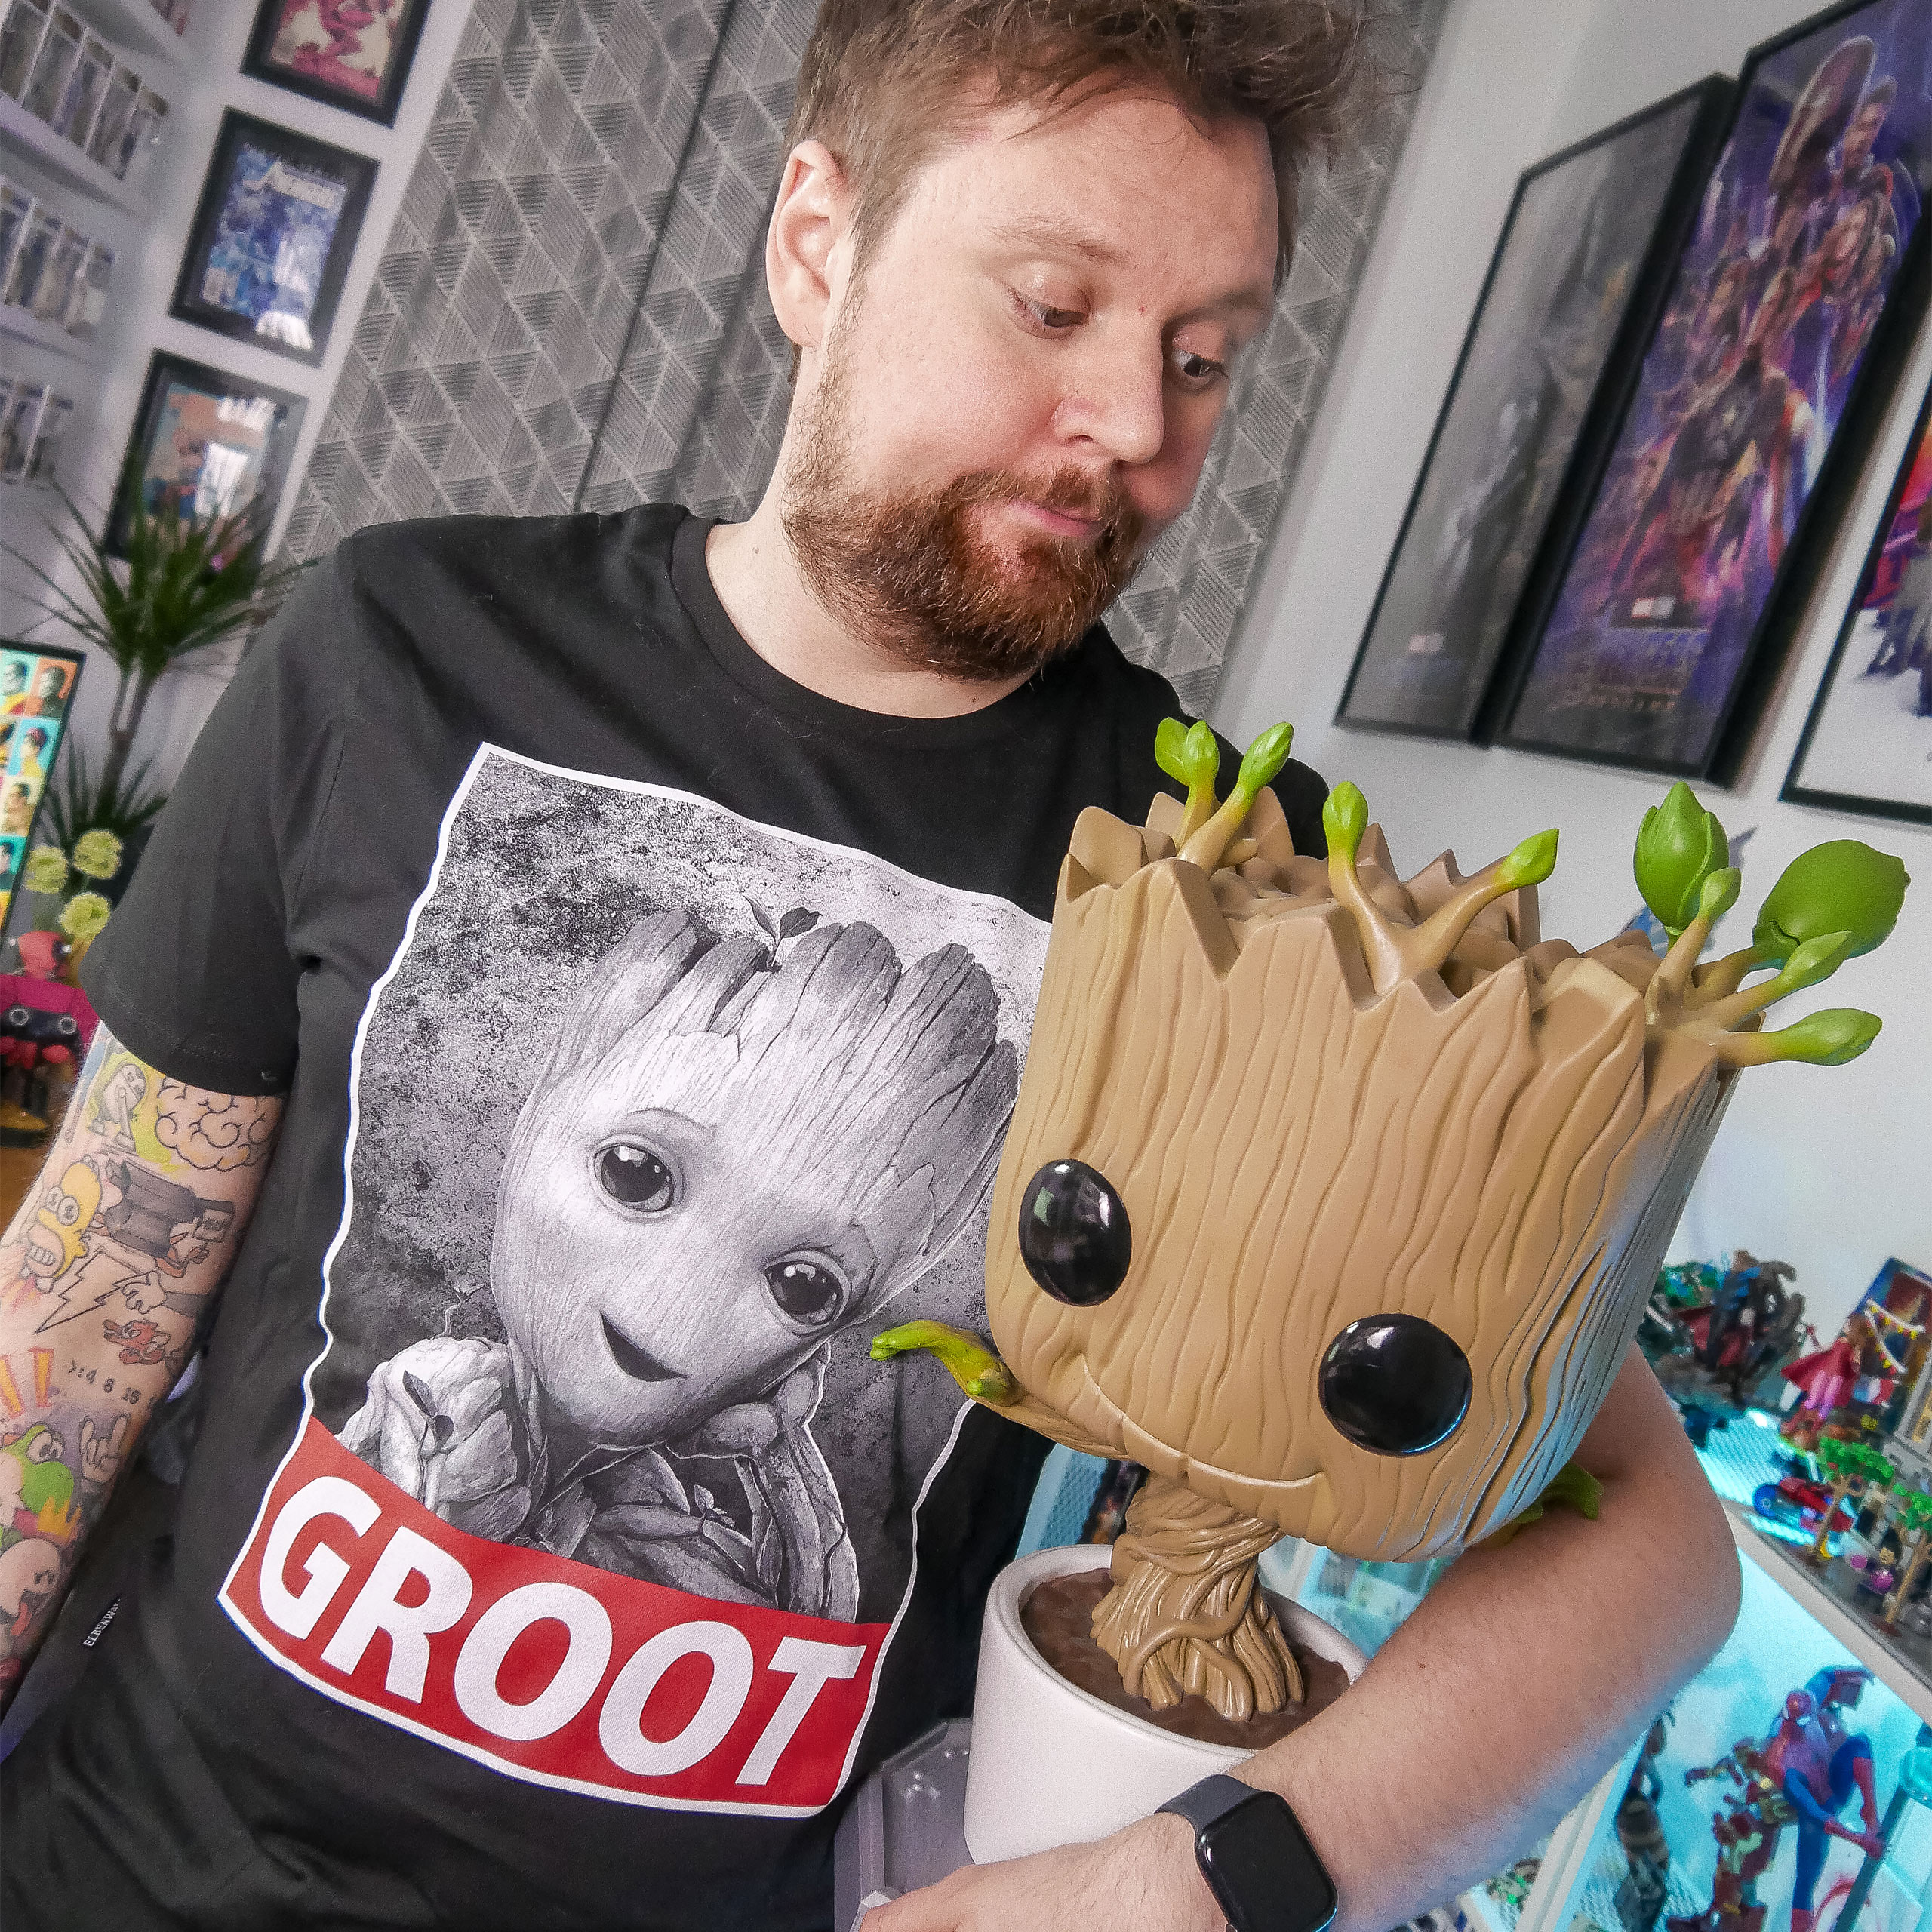 Baby Groot T-Shirt schwarz - Marvel